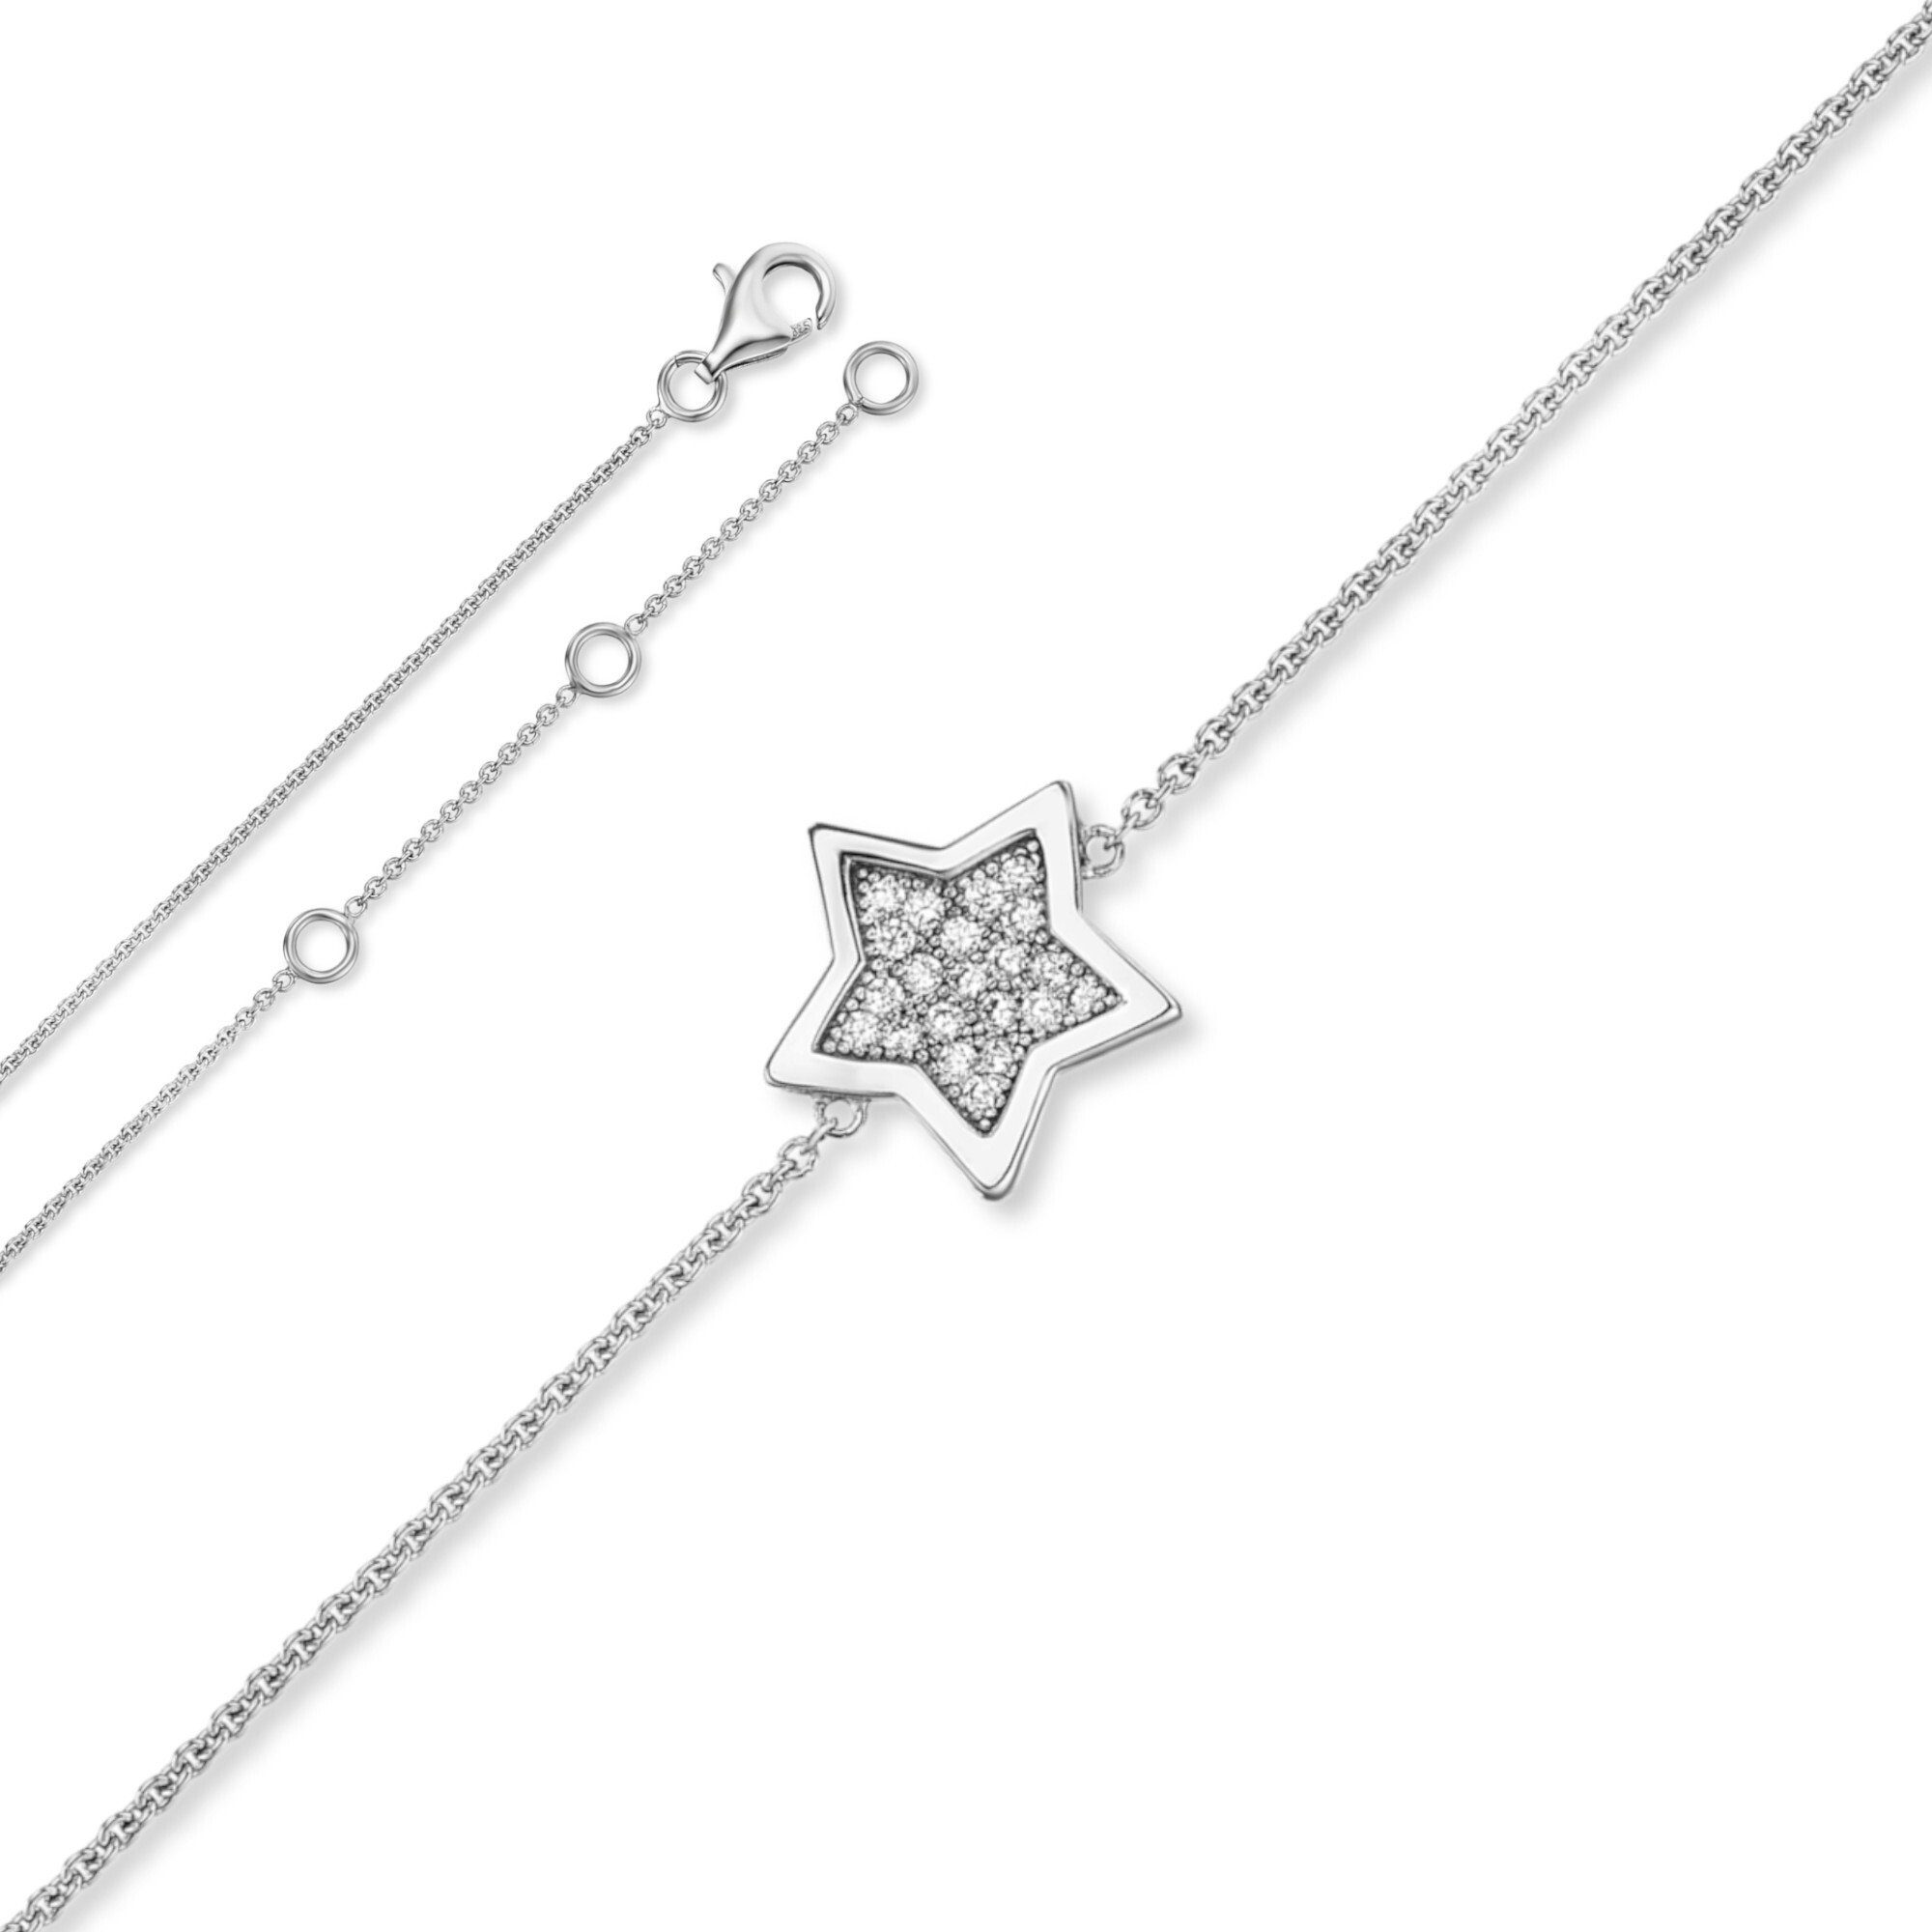 ONE ELEMENT Silberarmband Zirkonia Stern Armband aus 925 Silber 18 cm Ø, Damen Silber Schmuck Stern